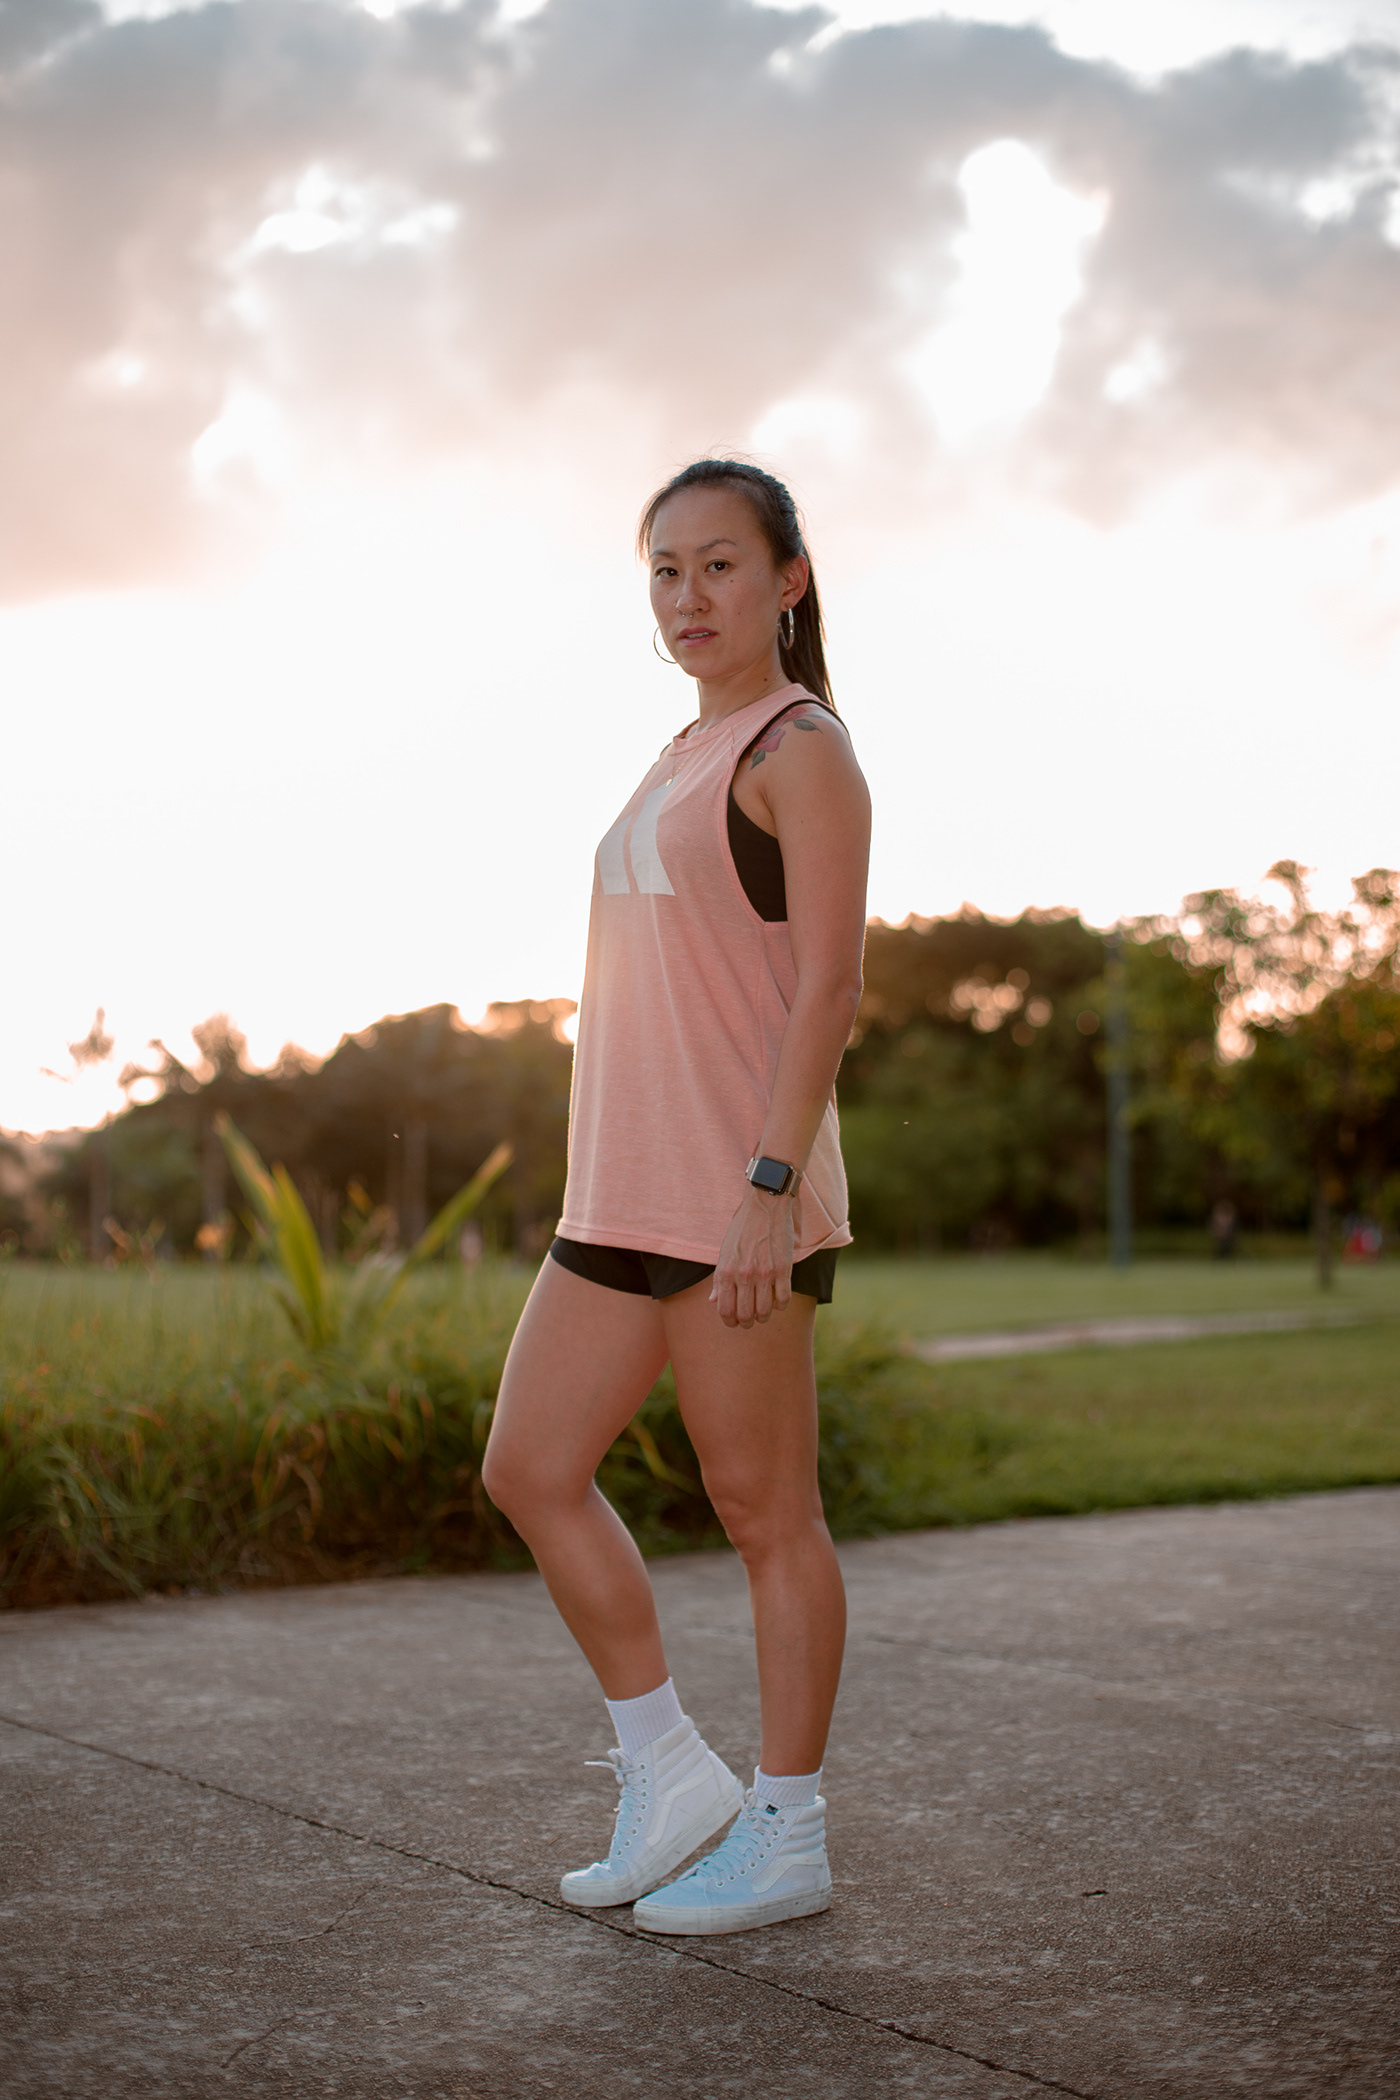 person beauty portrait model sport running fitness movimento SKY sunset